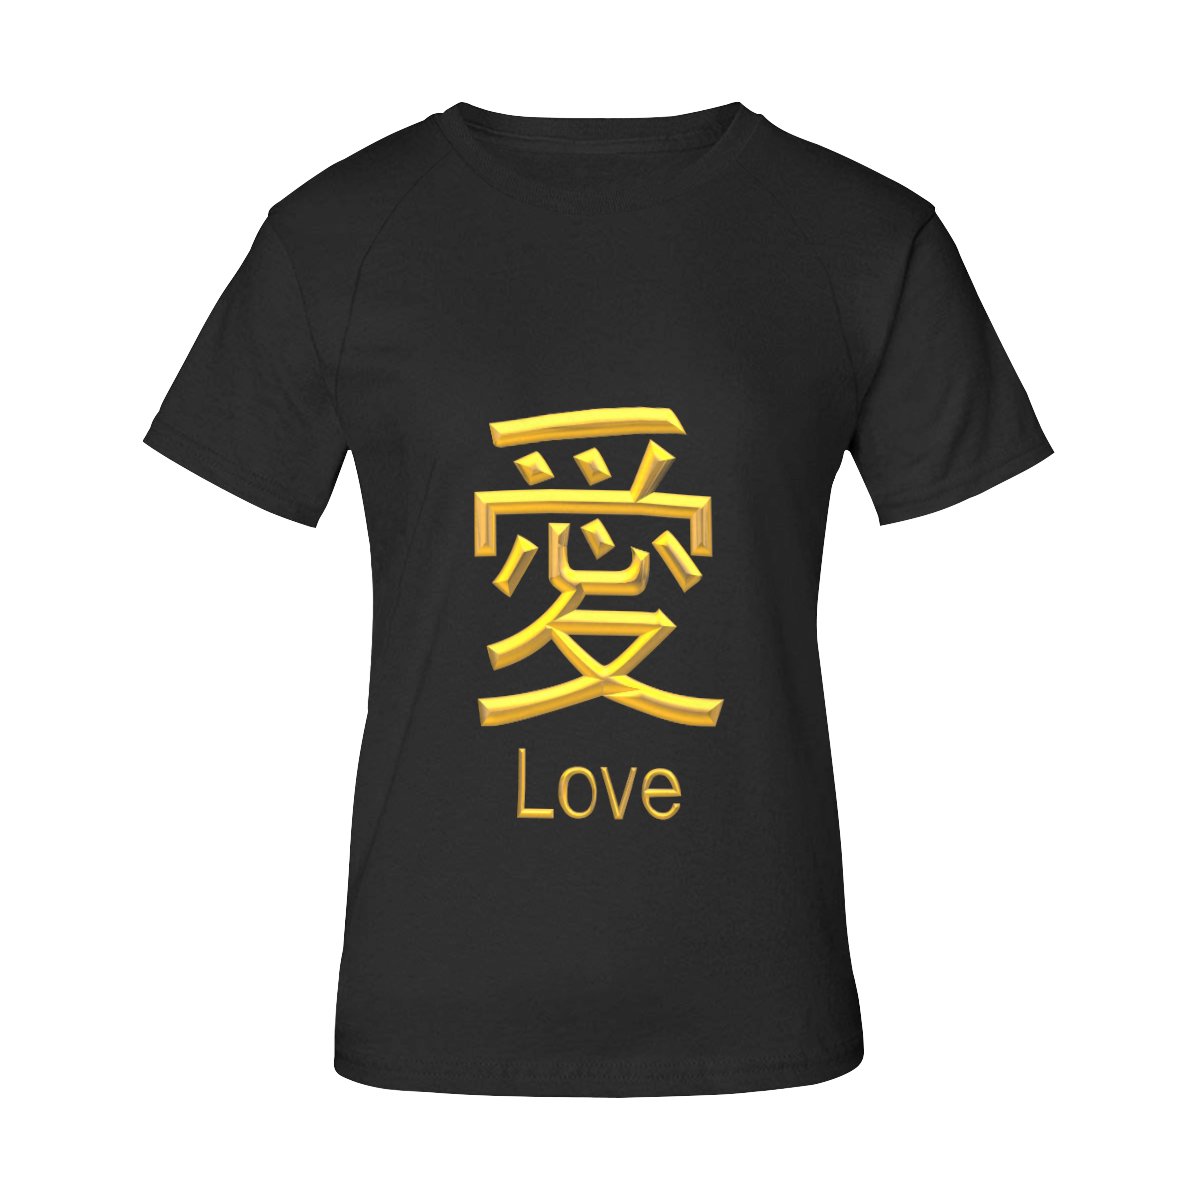 SA-Golden Asian Symbol for Love Women's Raglan T-Shirt/Front Printing (Model T62)